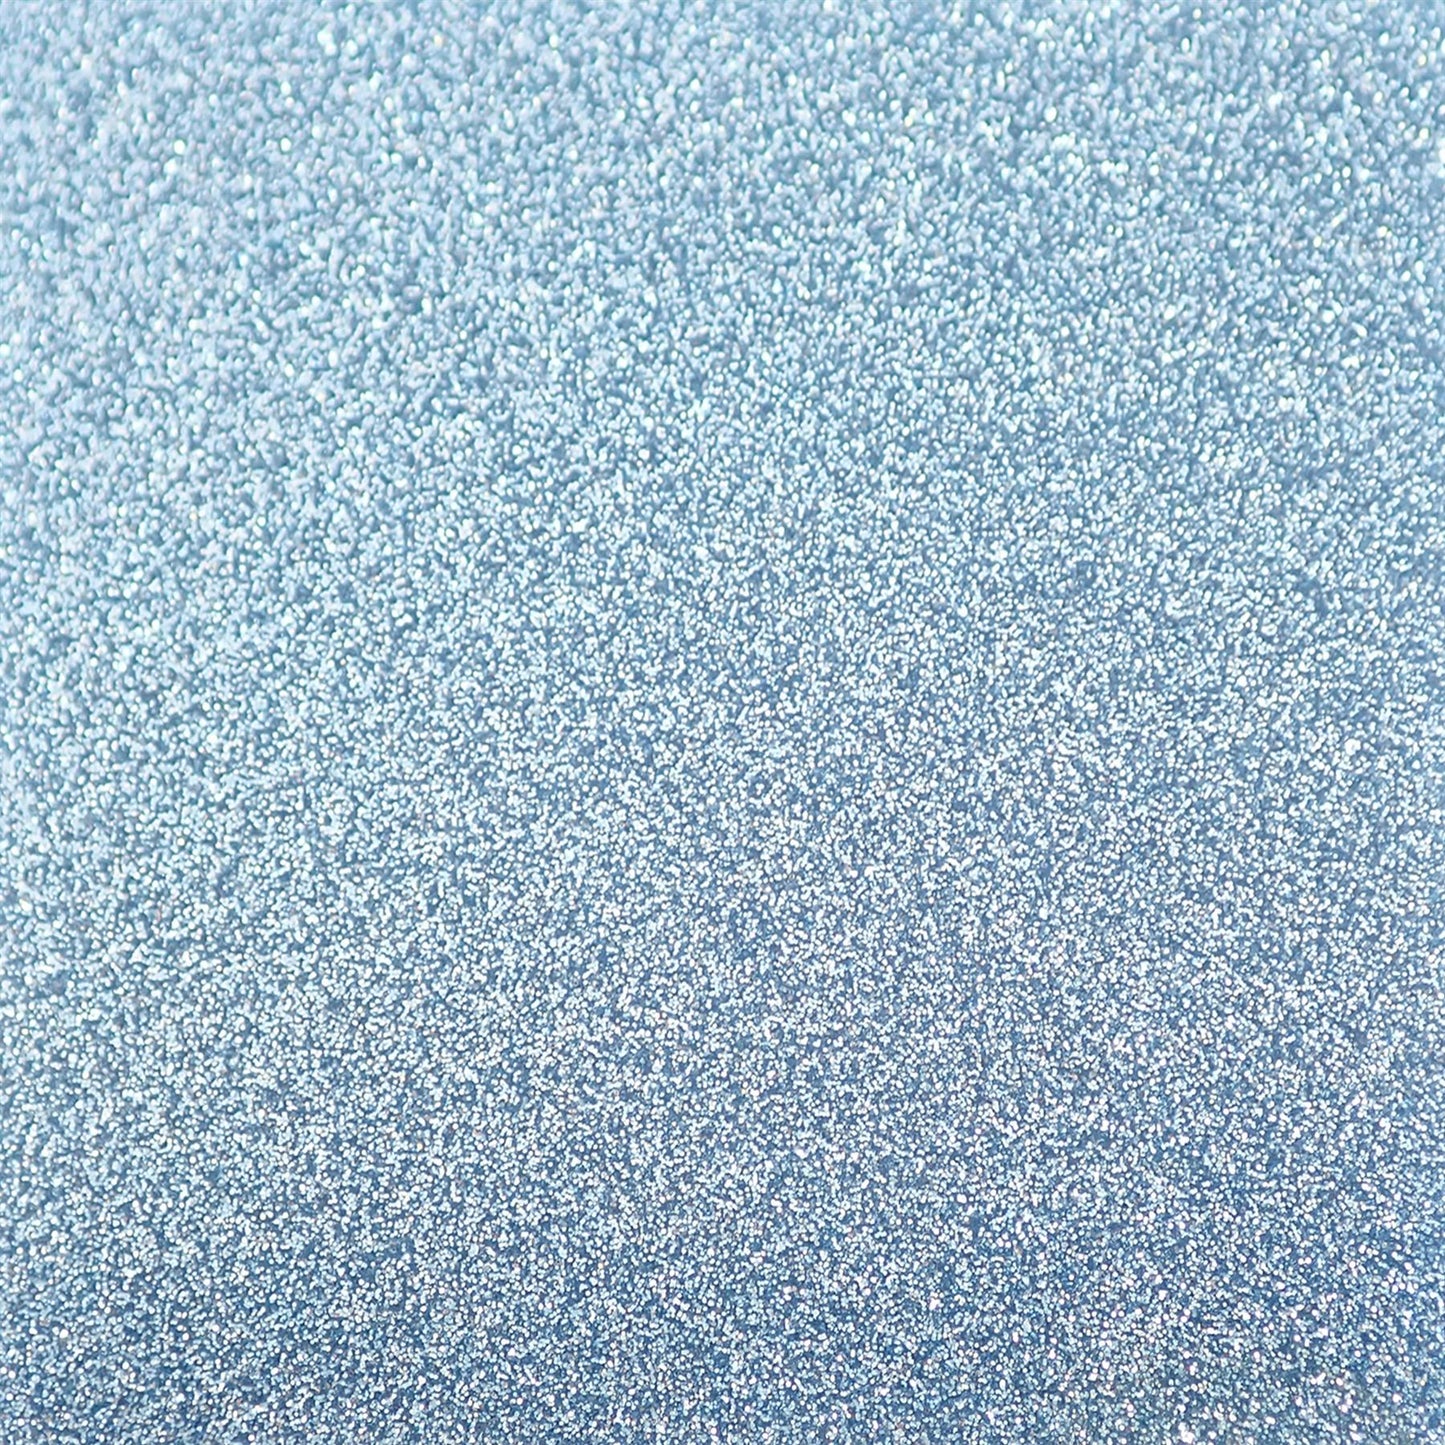 [Incudo] Baby Blue Glitter Acrylic Sheet - 1000x600x3mm